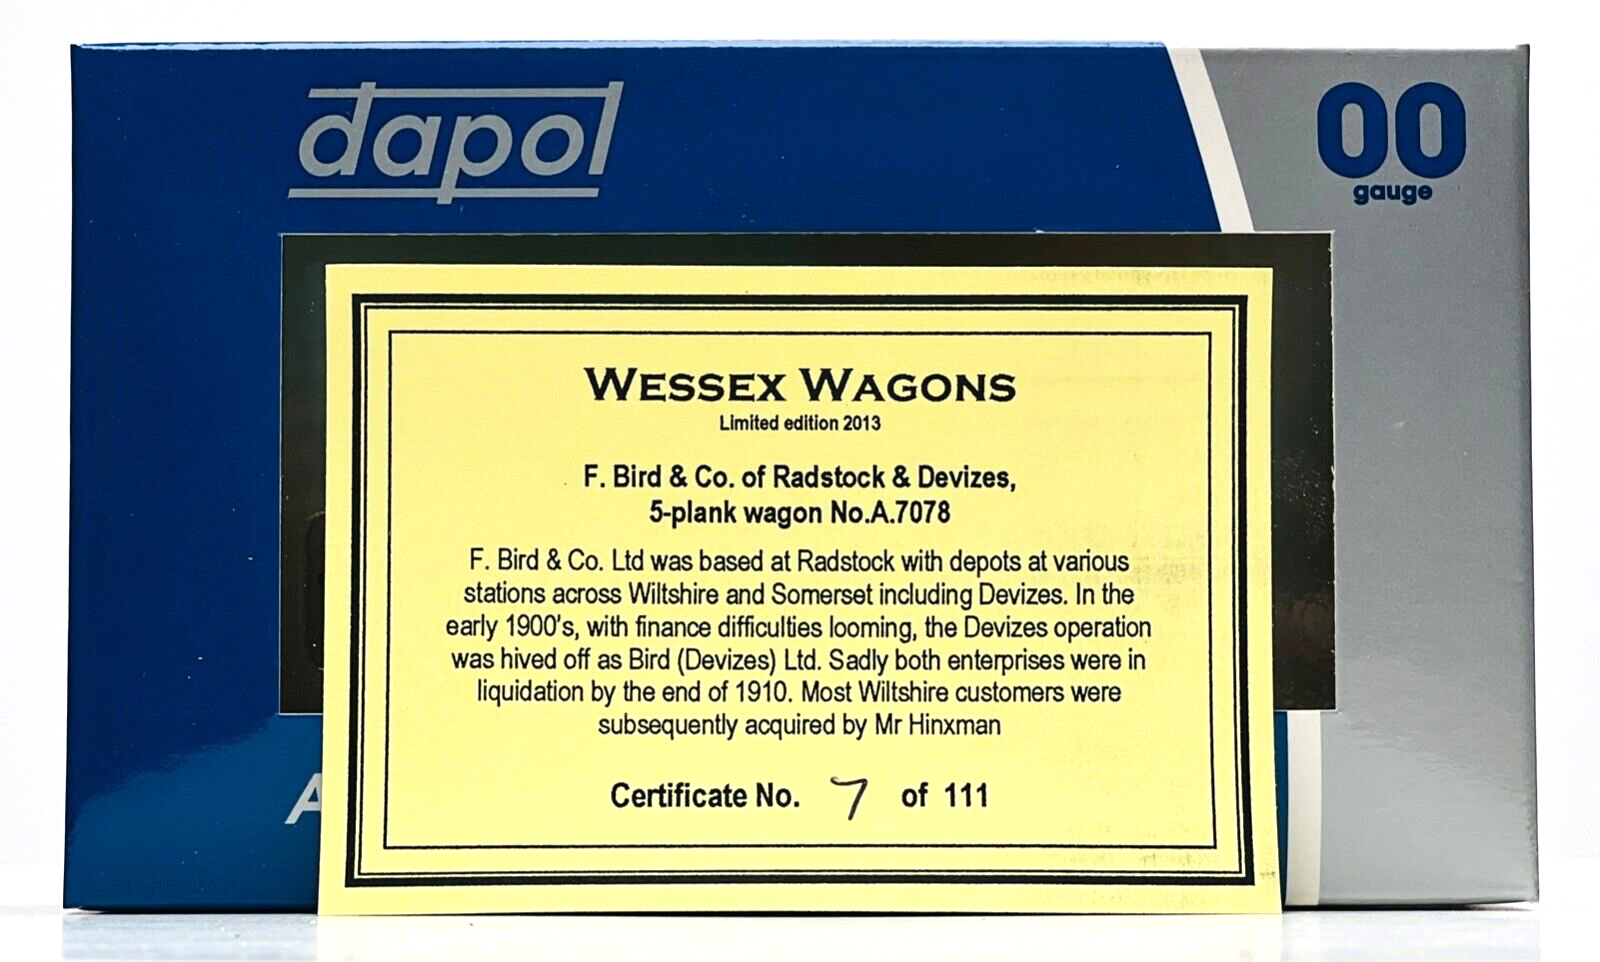 DAPOL 00 GAUGE - F. BIRD & CO RADSTOCK DEVIZES PLANK 7078 (WESSEX WAGONS LTD ED)